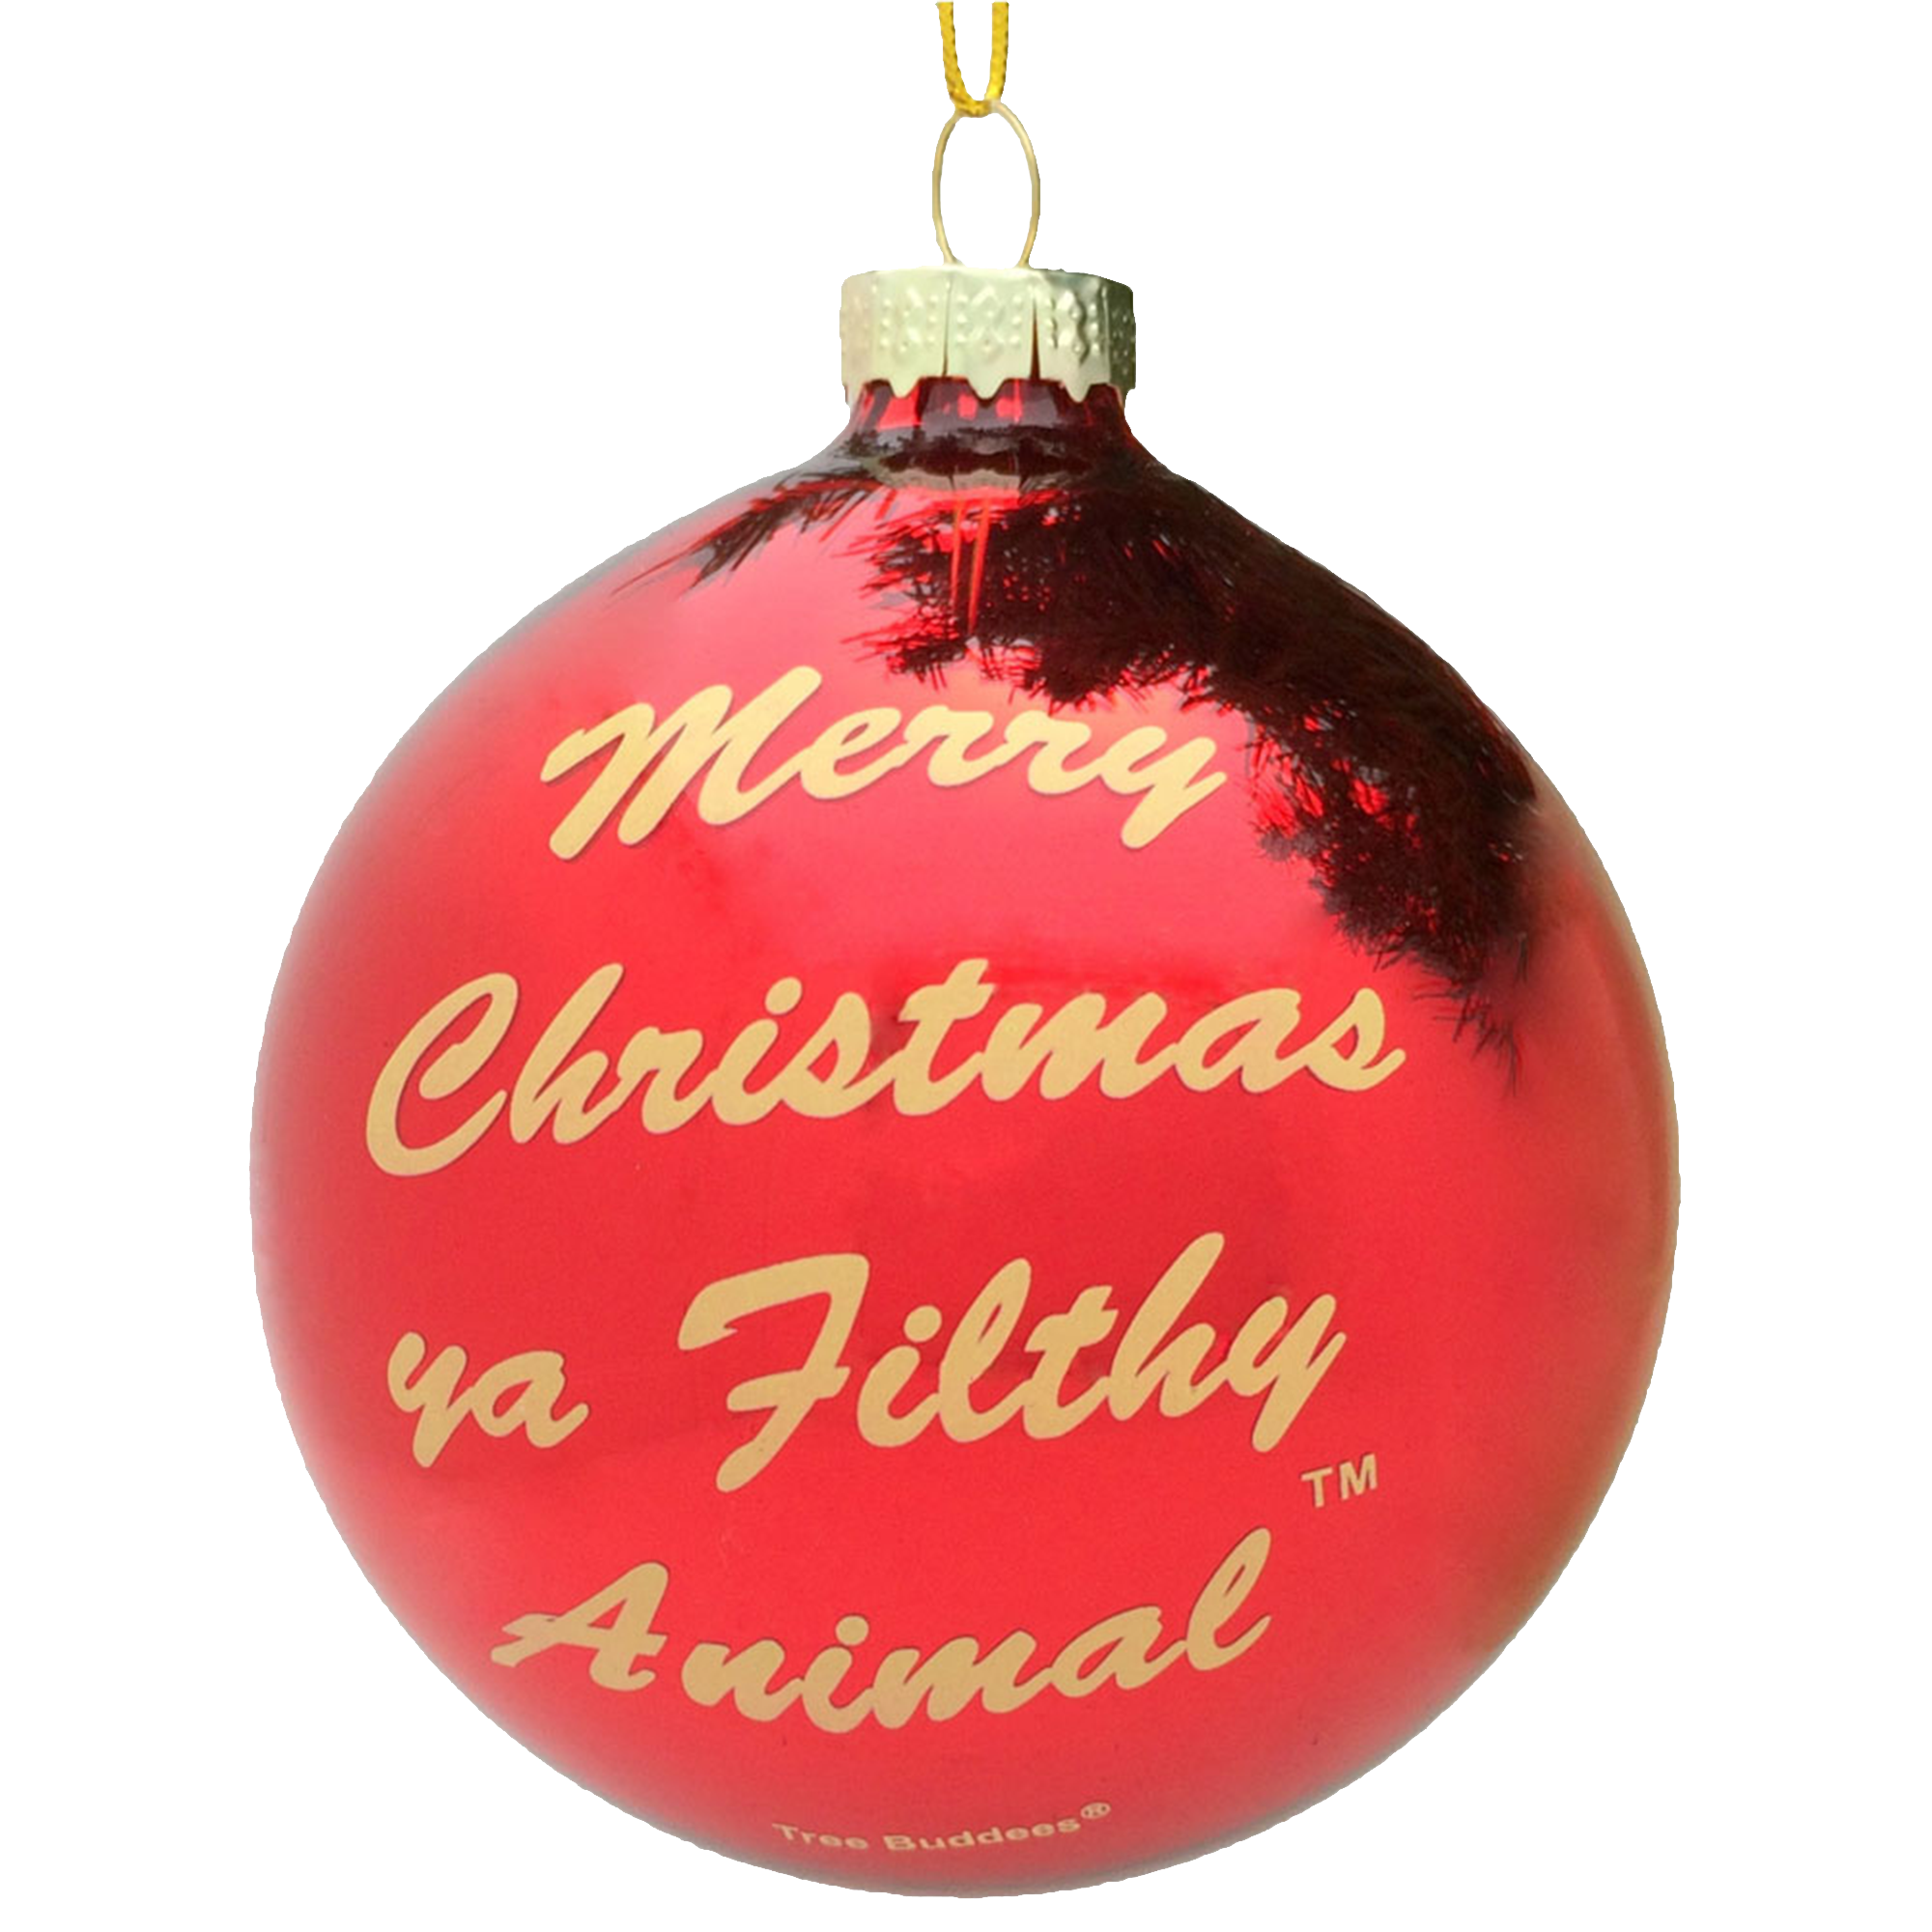 merry christmas you filthy animal ornament